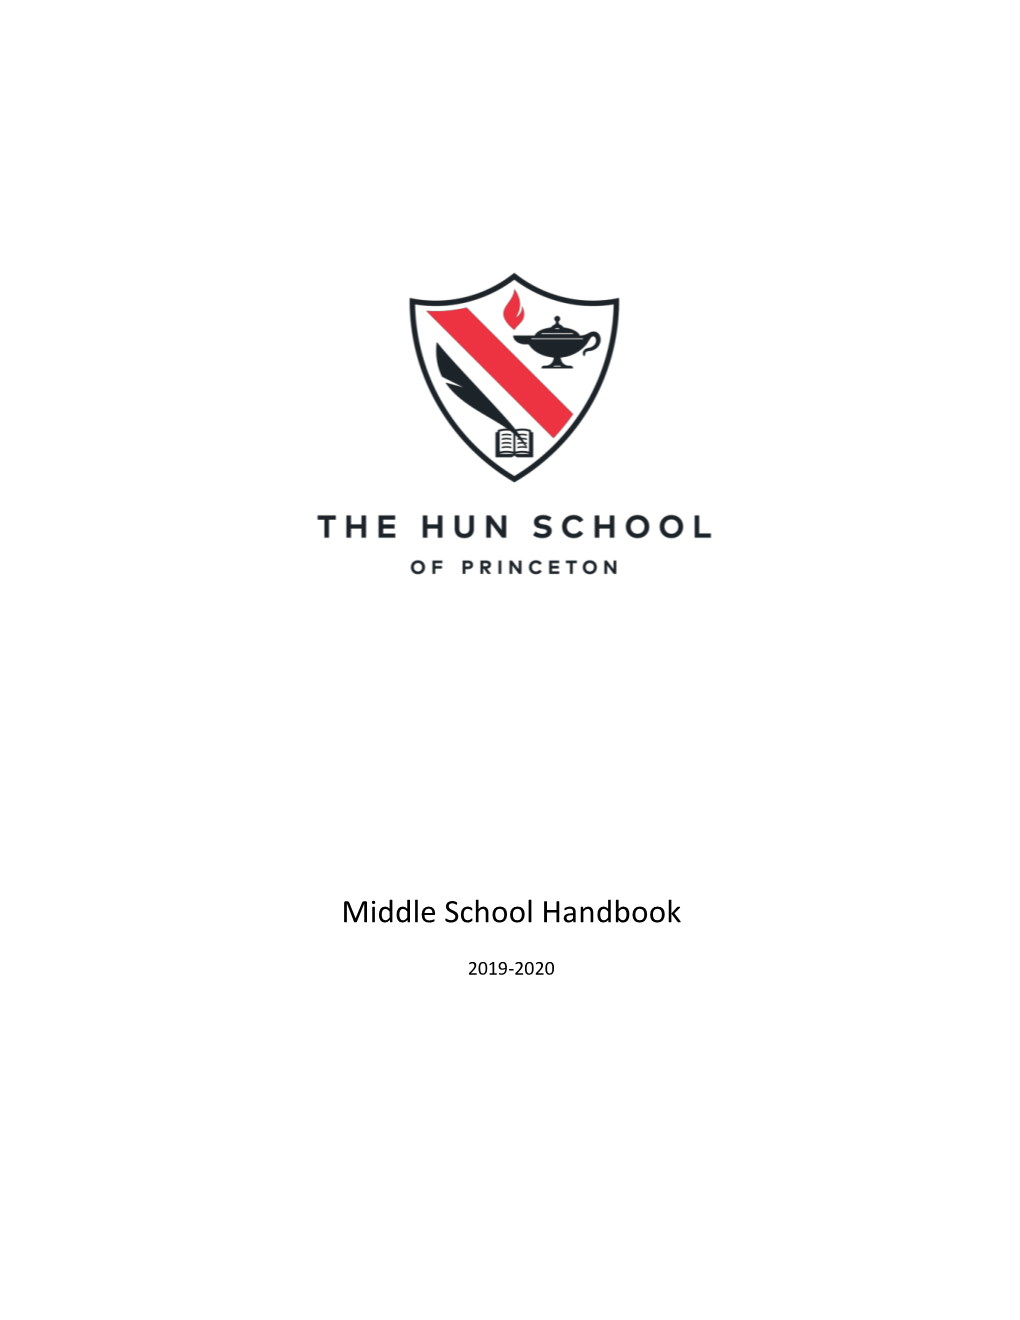 Middle School Handbook